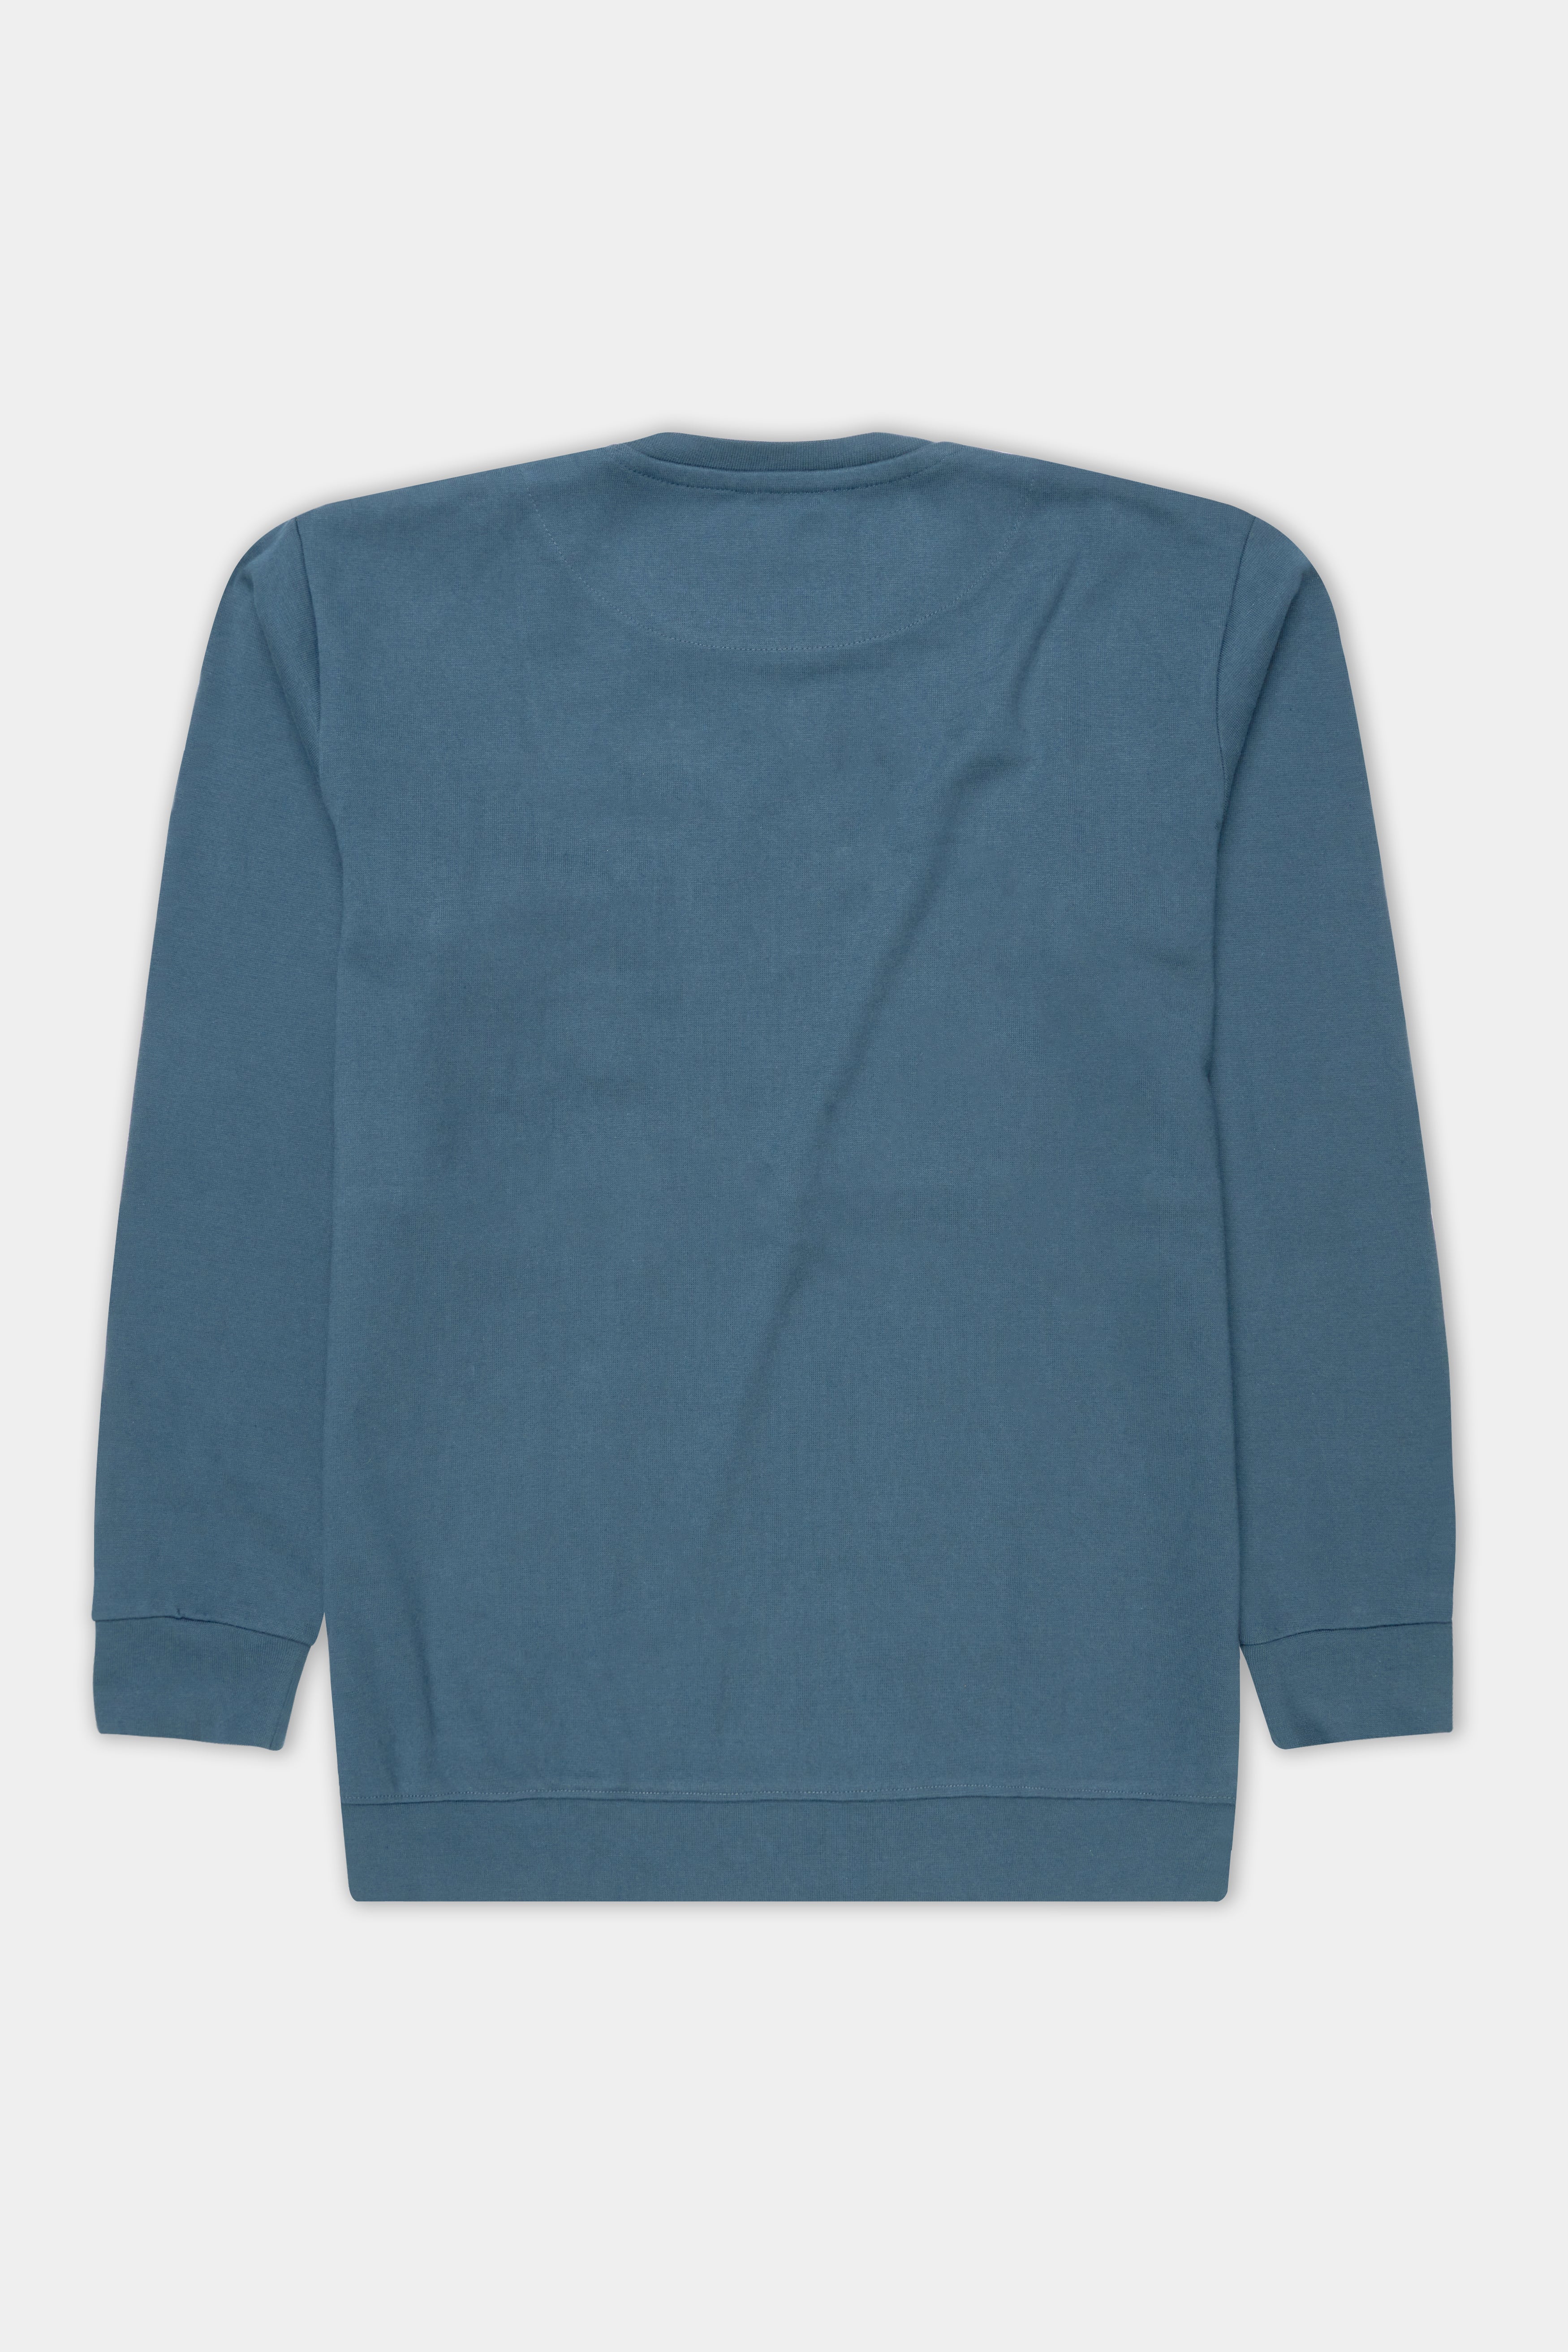 Marengo Blue and Sage Green Hand Painted Premium Cotton Jersey Sweatshirt,TS517-W01-ART-S, TS517-W01-ART-M, TS517-W01-ART-L, TS517-W01-ART-XL, TS517-W01-ART-XXL